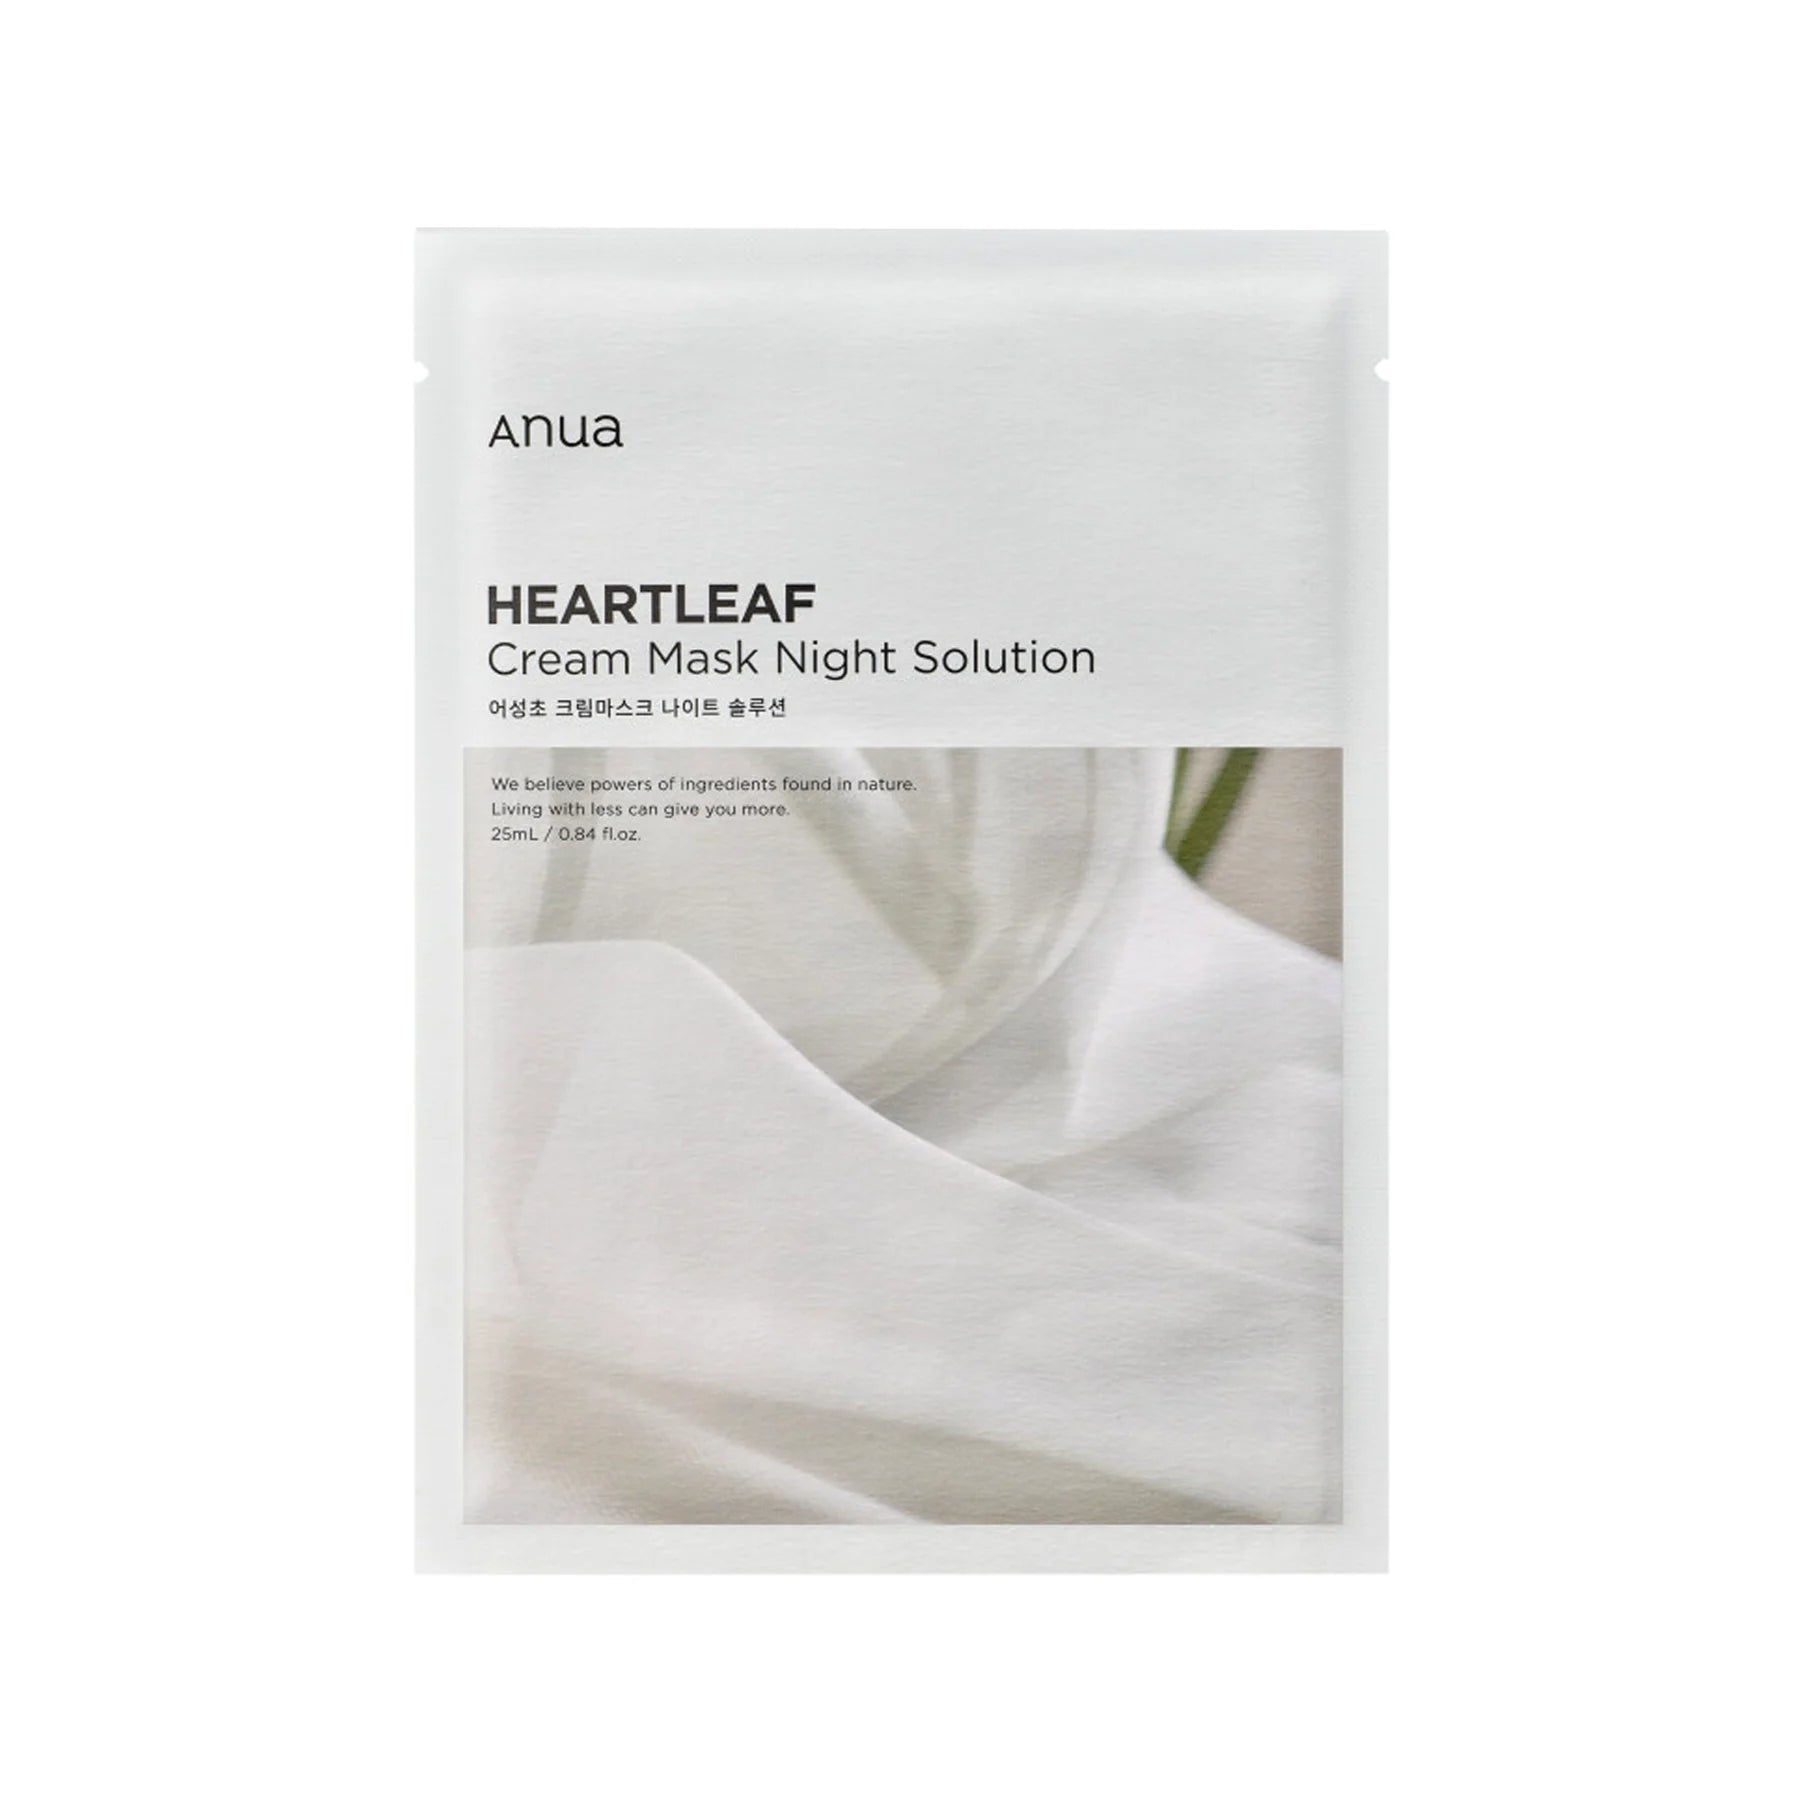 ANUA - Heartleaf Cream Mask Night Solution Pack